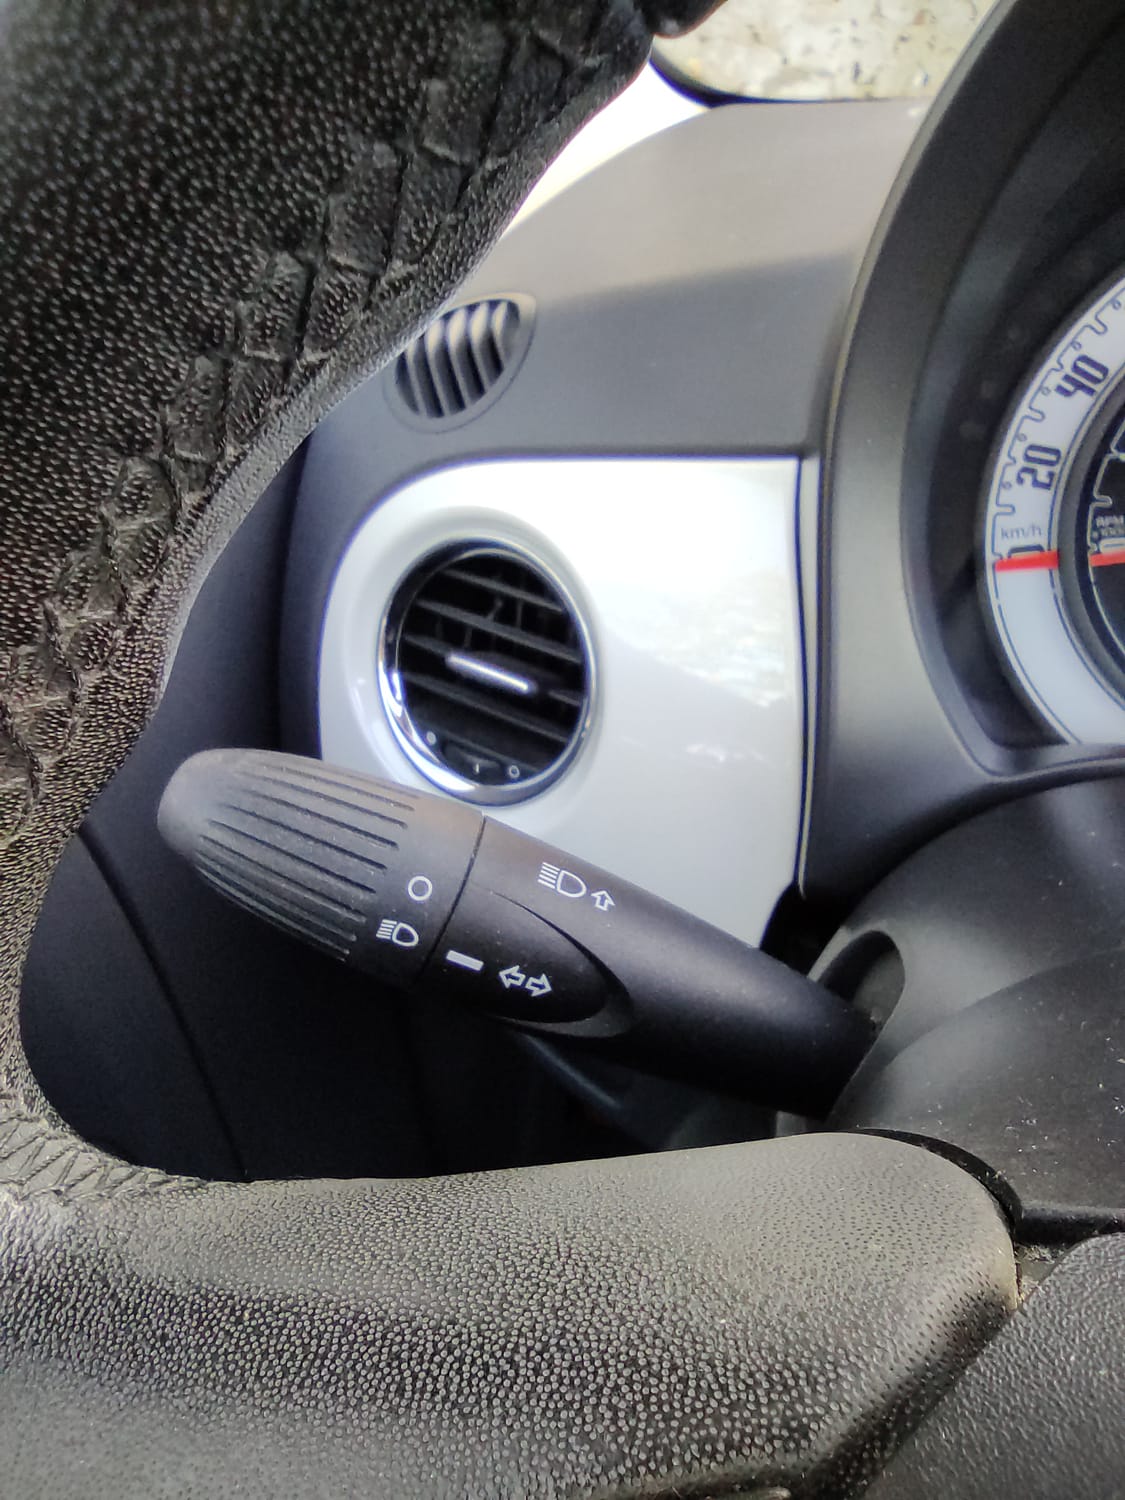 FIAT 500 II C 2014 0.9 8V 105 TWINAIR Start&Stop LOUNGE - Automatix Motors - Voiture Occasion - Achat - Vente - Reprise